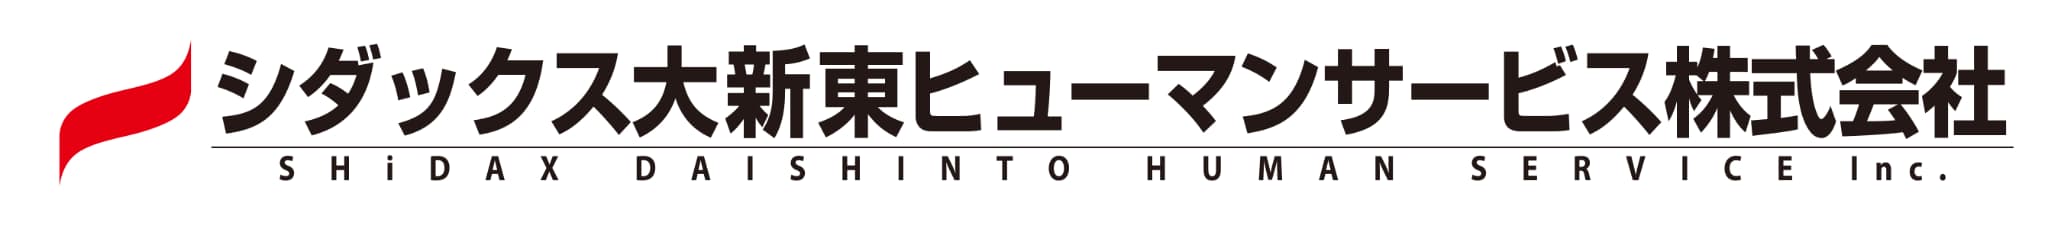 logo_sdh.jpg